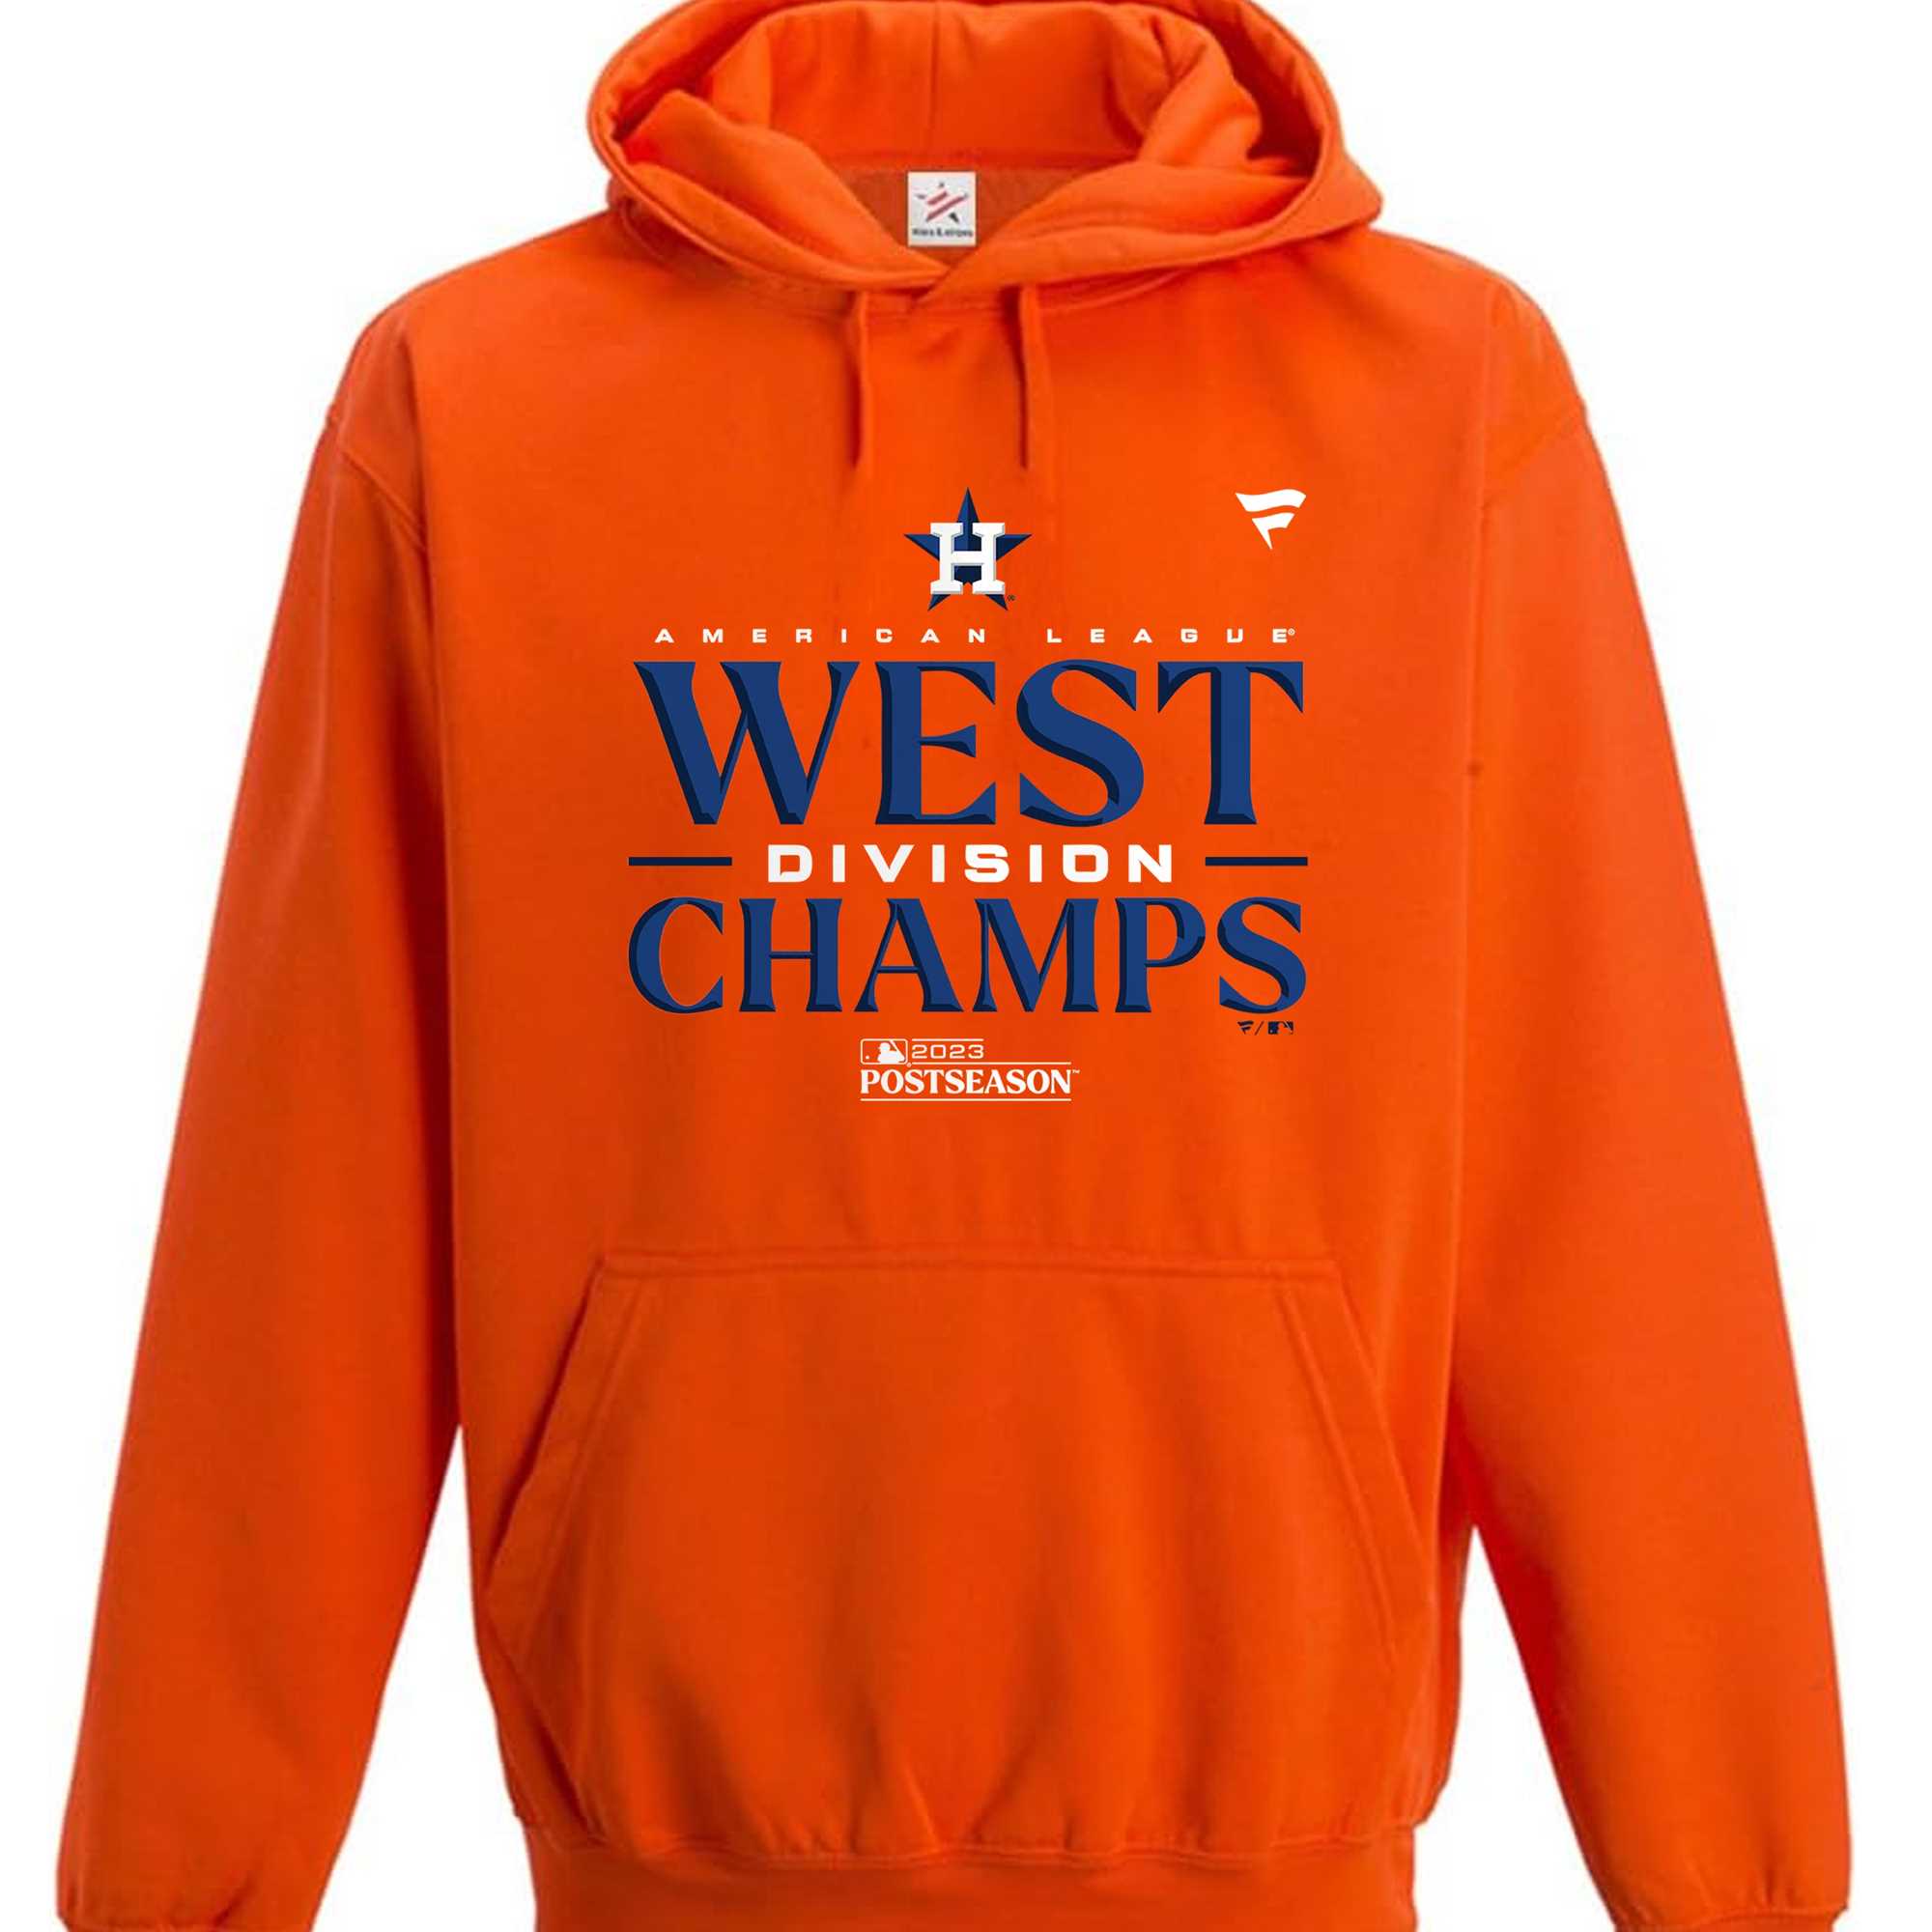 2023 AL West Division Champions Houston Astros Team Shirt, hoodie